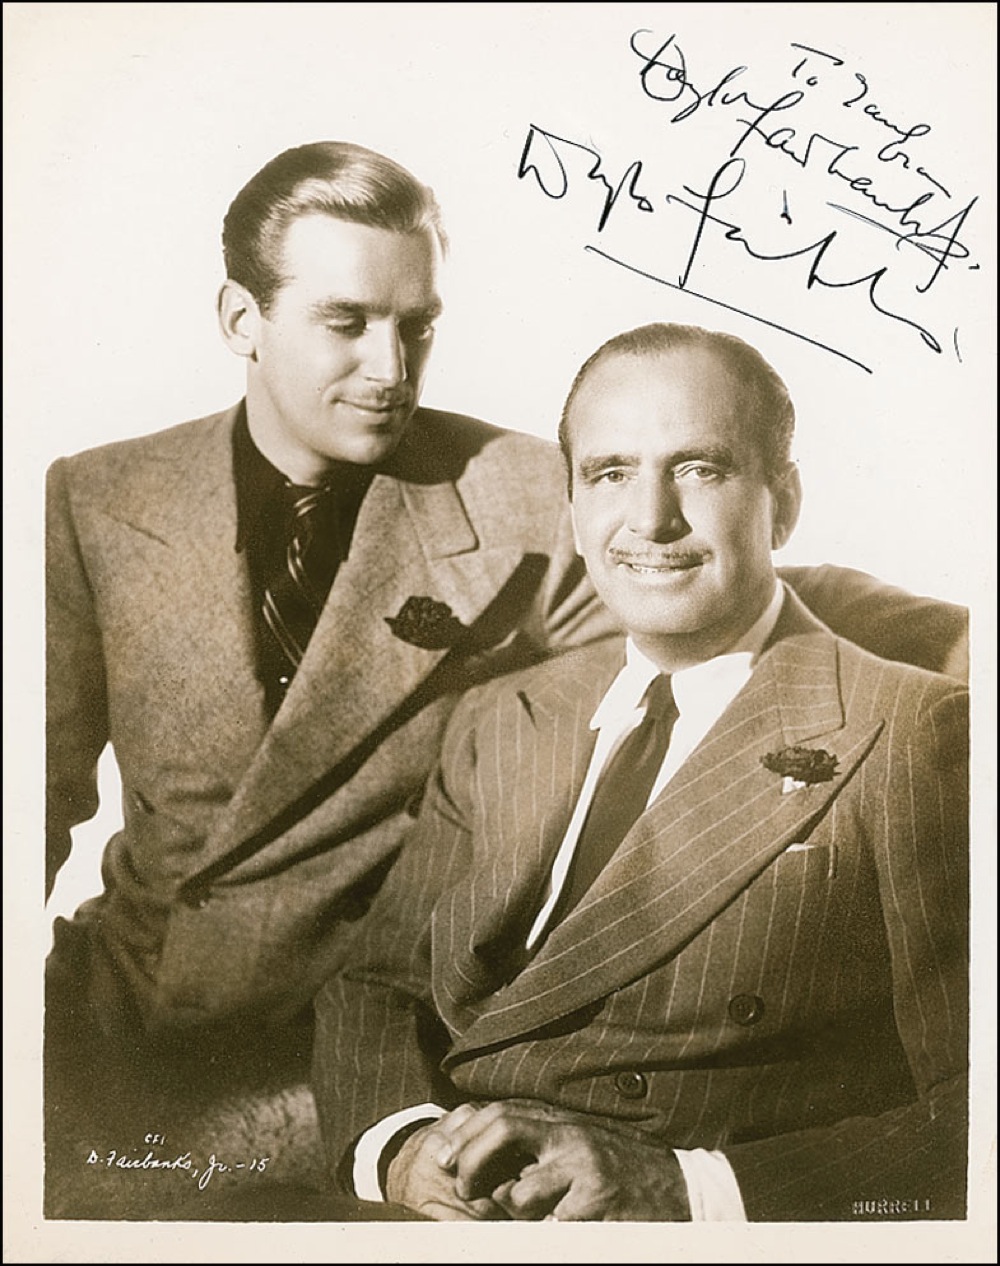 Lot #34 Douglas Fairbanks, Jr and Sr